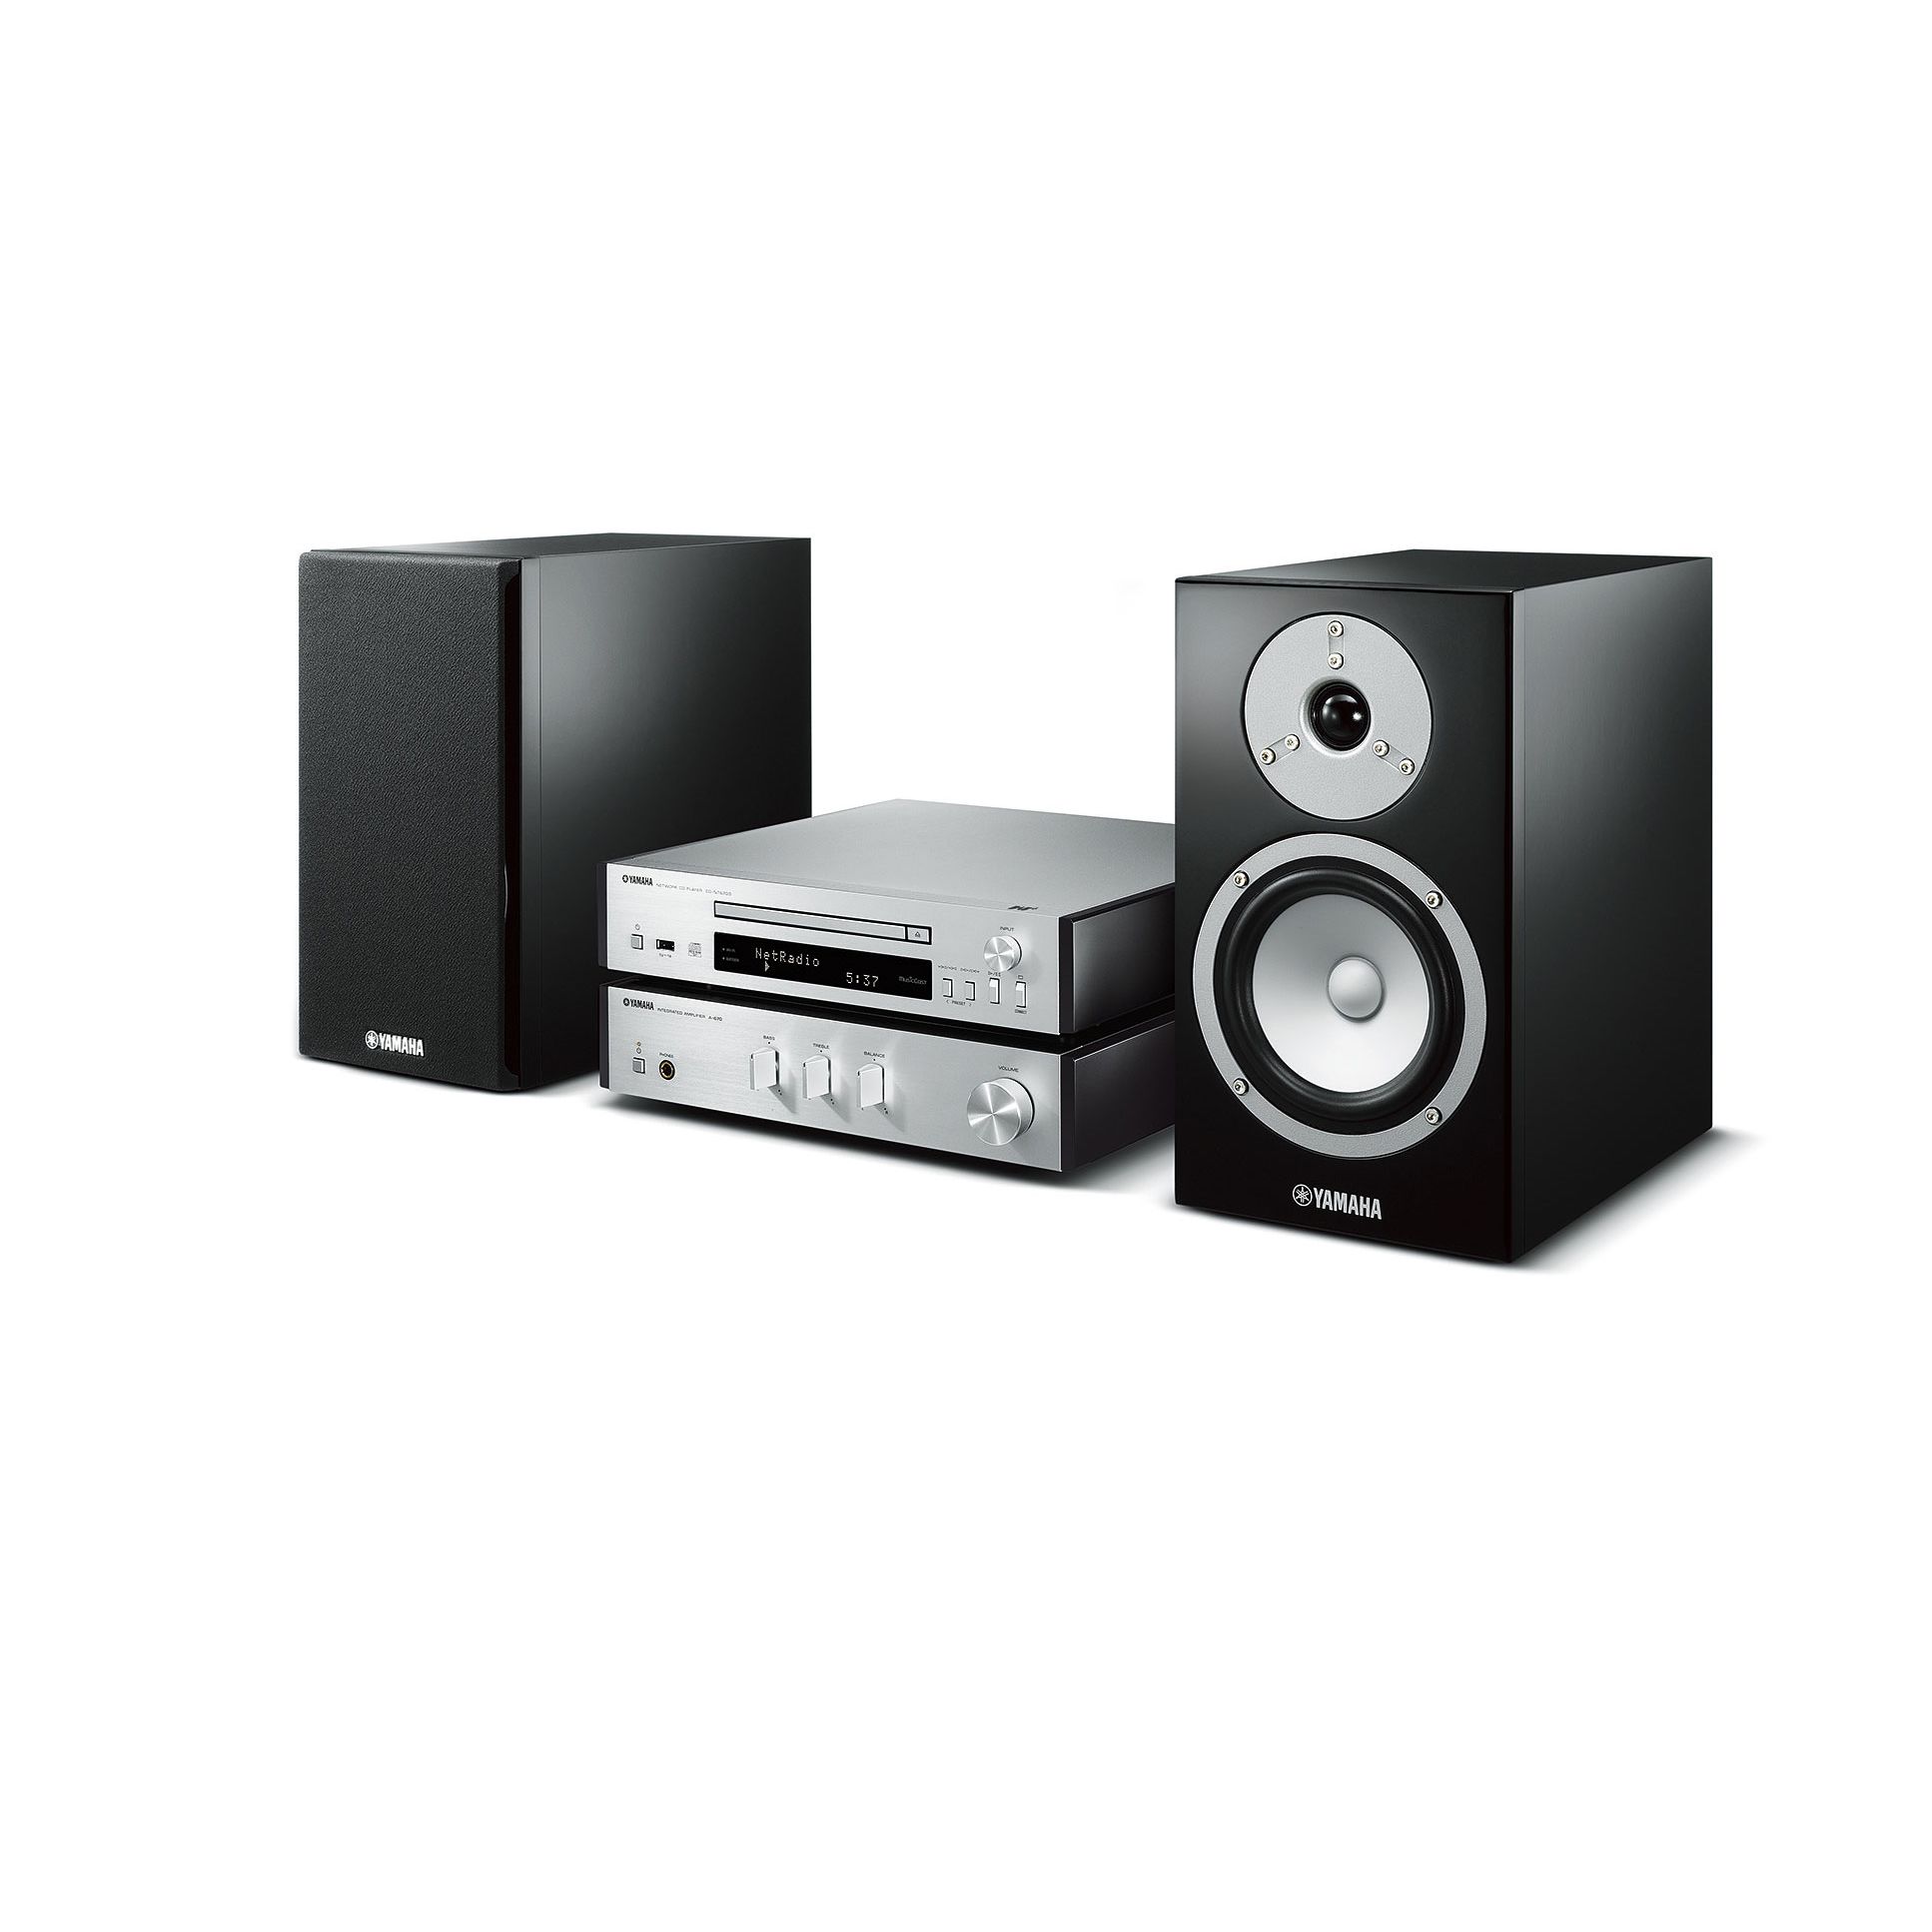 MusicCast MCR-N670D - Panoramica - Sistemi HiFi - Audio & Video ...